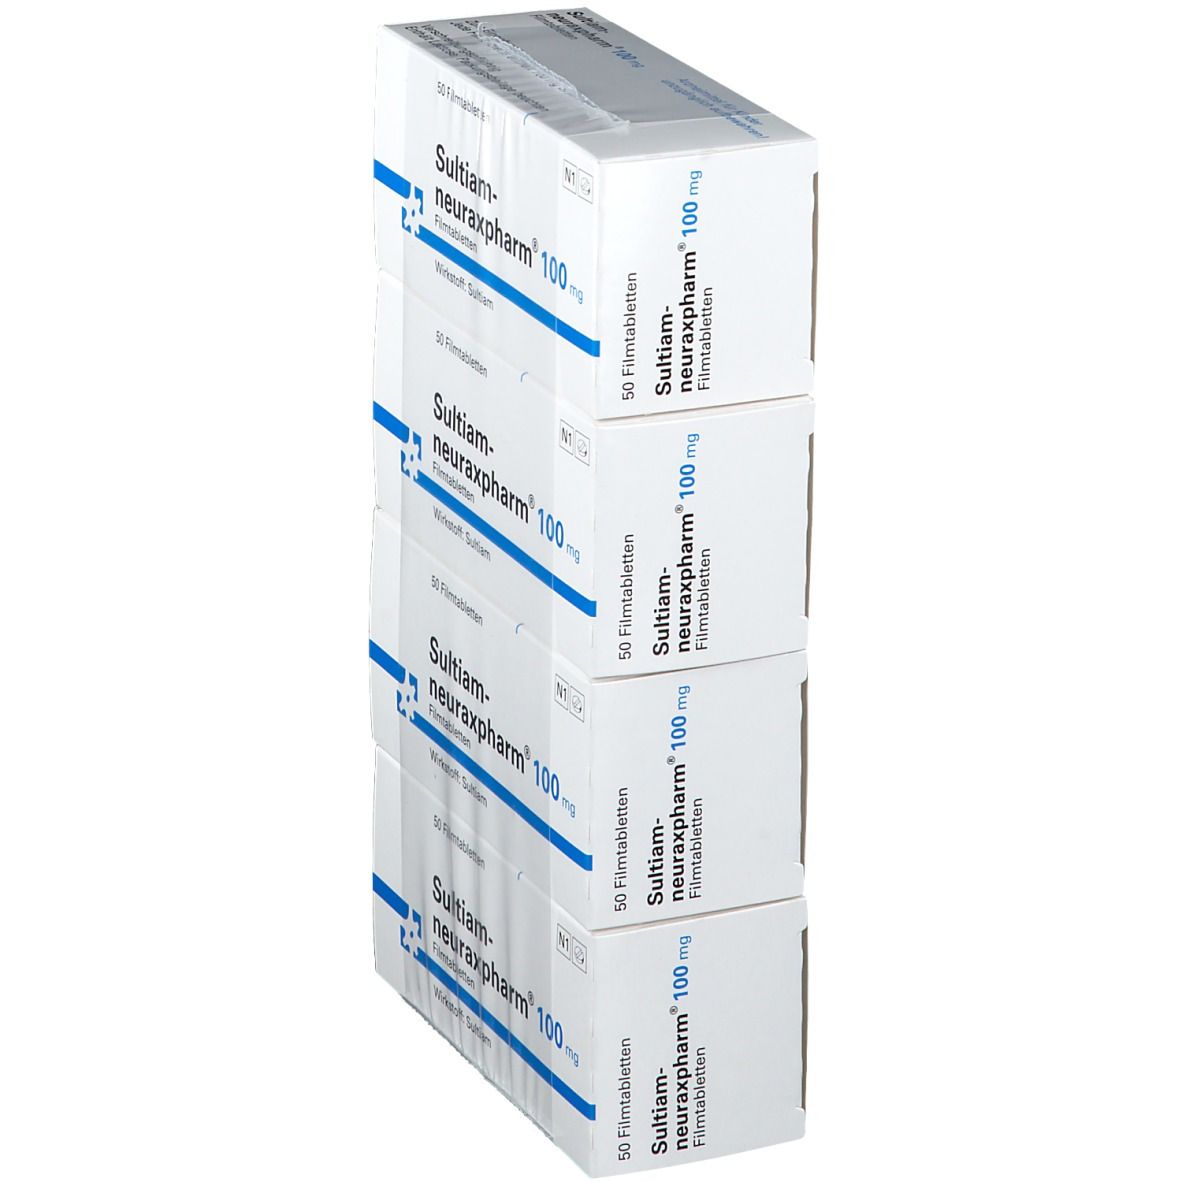 Sultiam-neuraxpharm® 100 mg